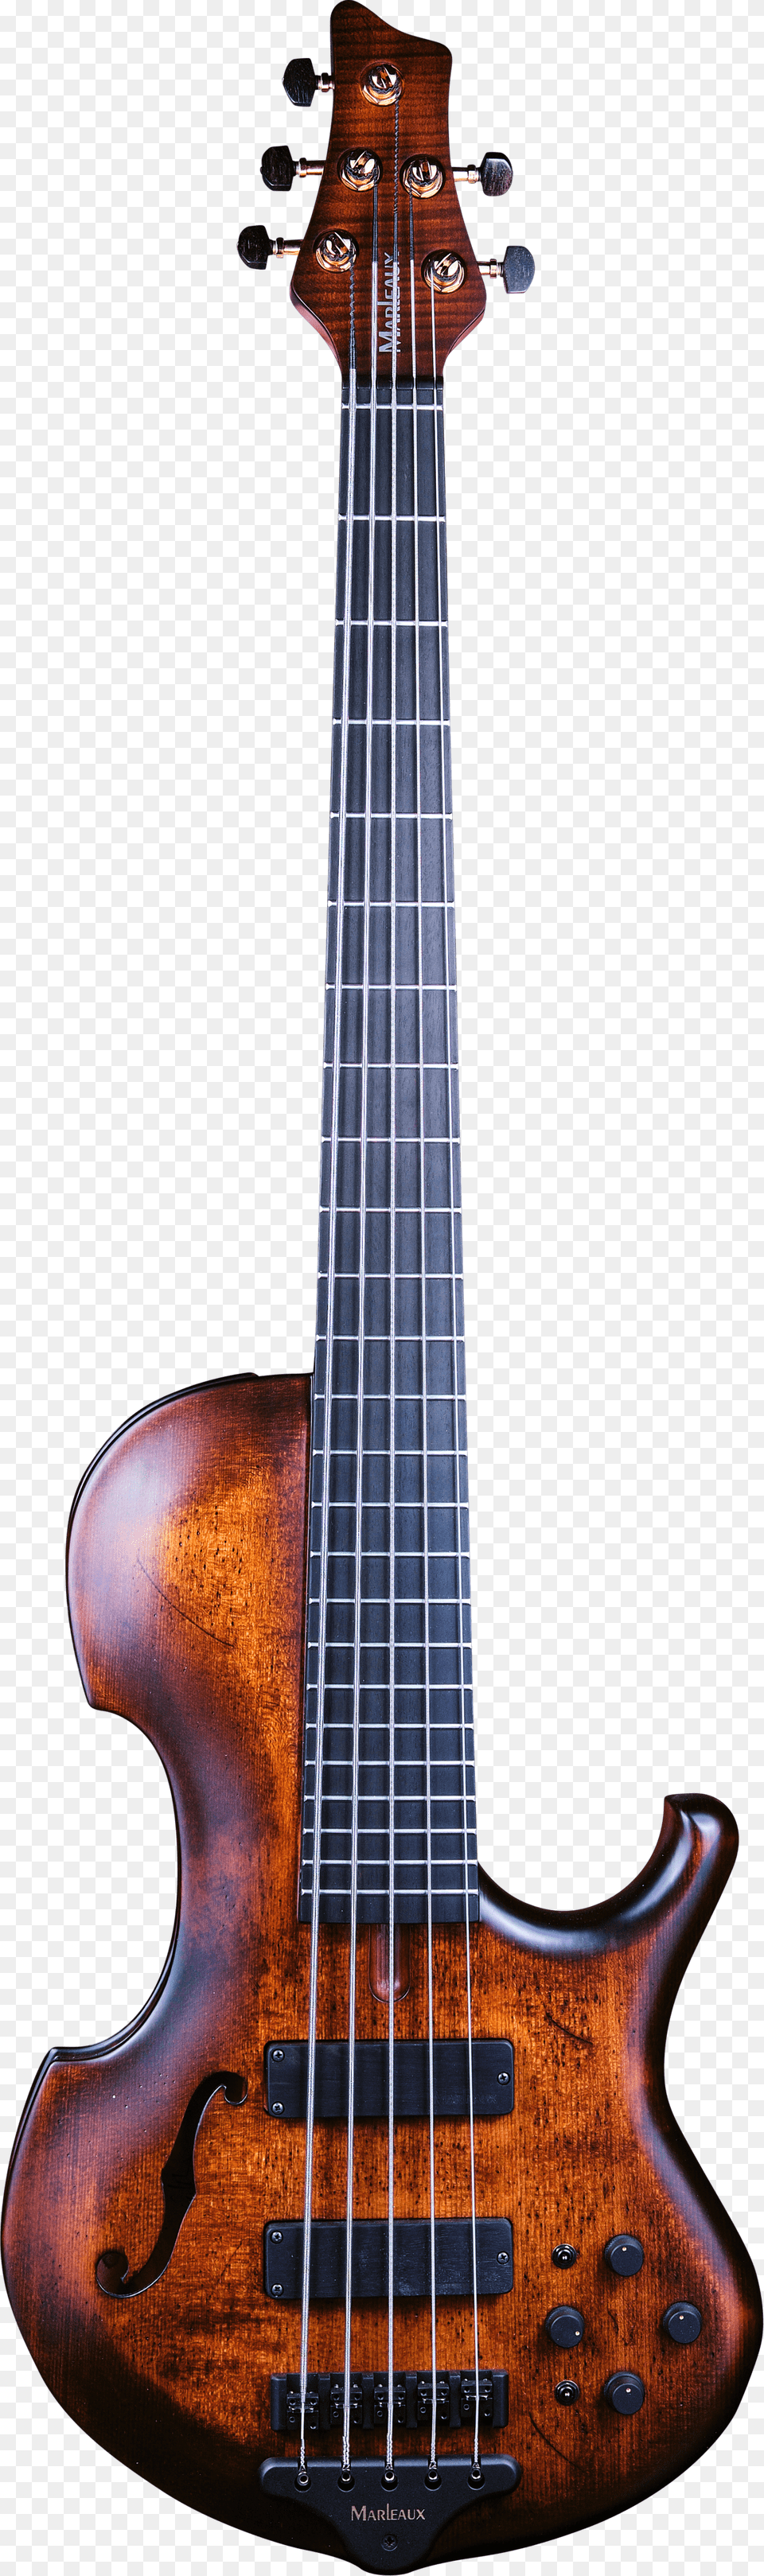 Contra, Bass Guitar, Guitar, Musical Instrument Png